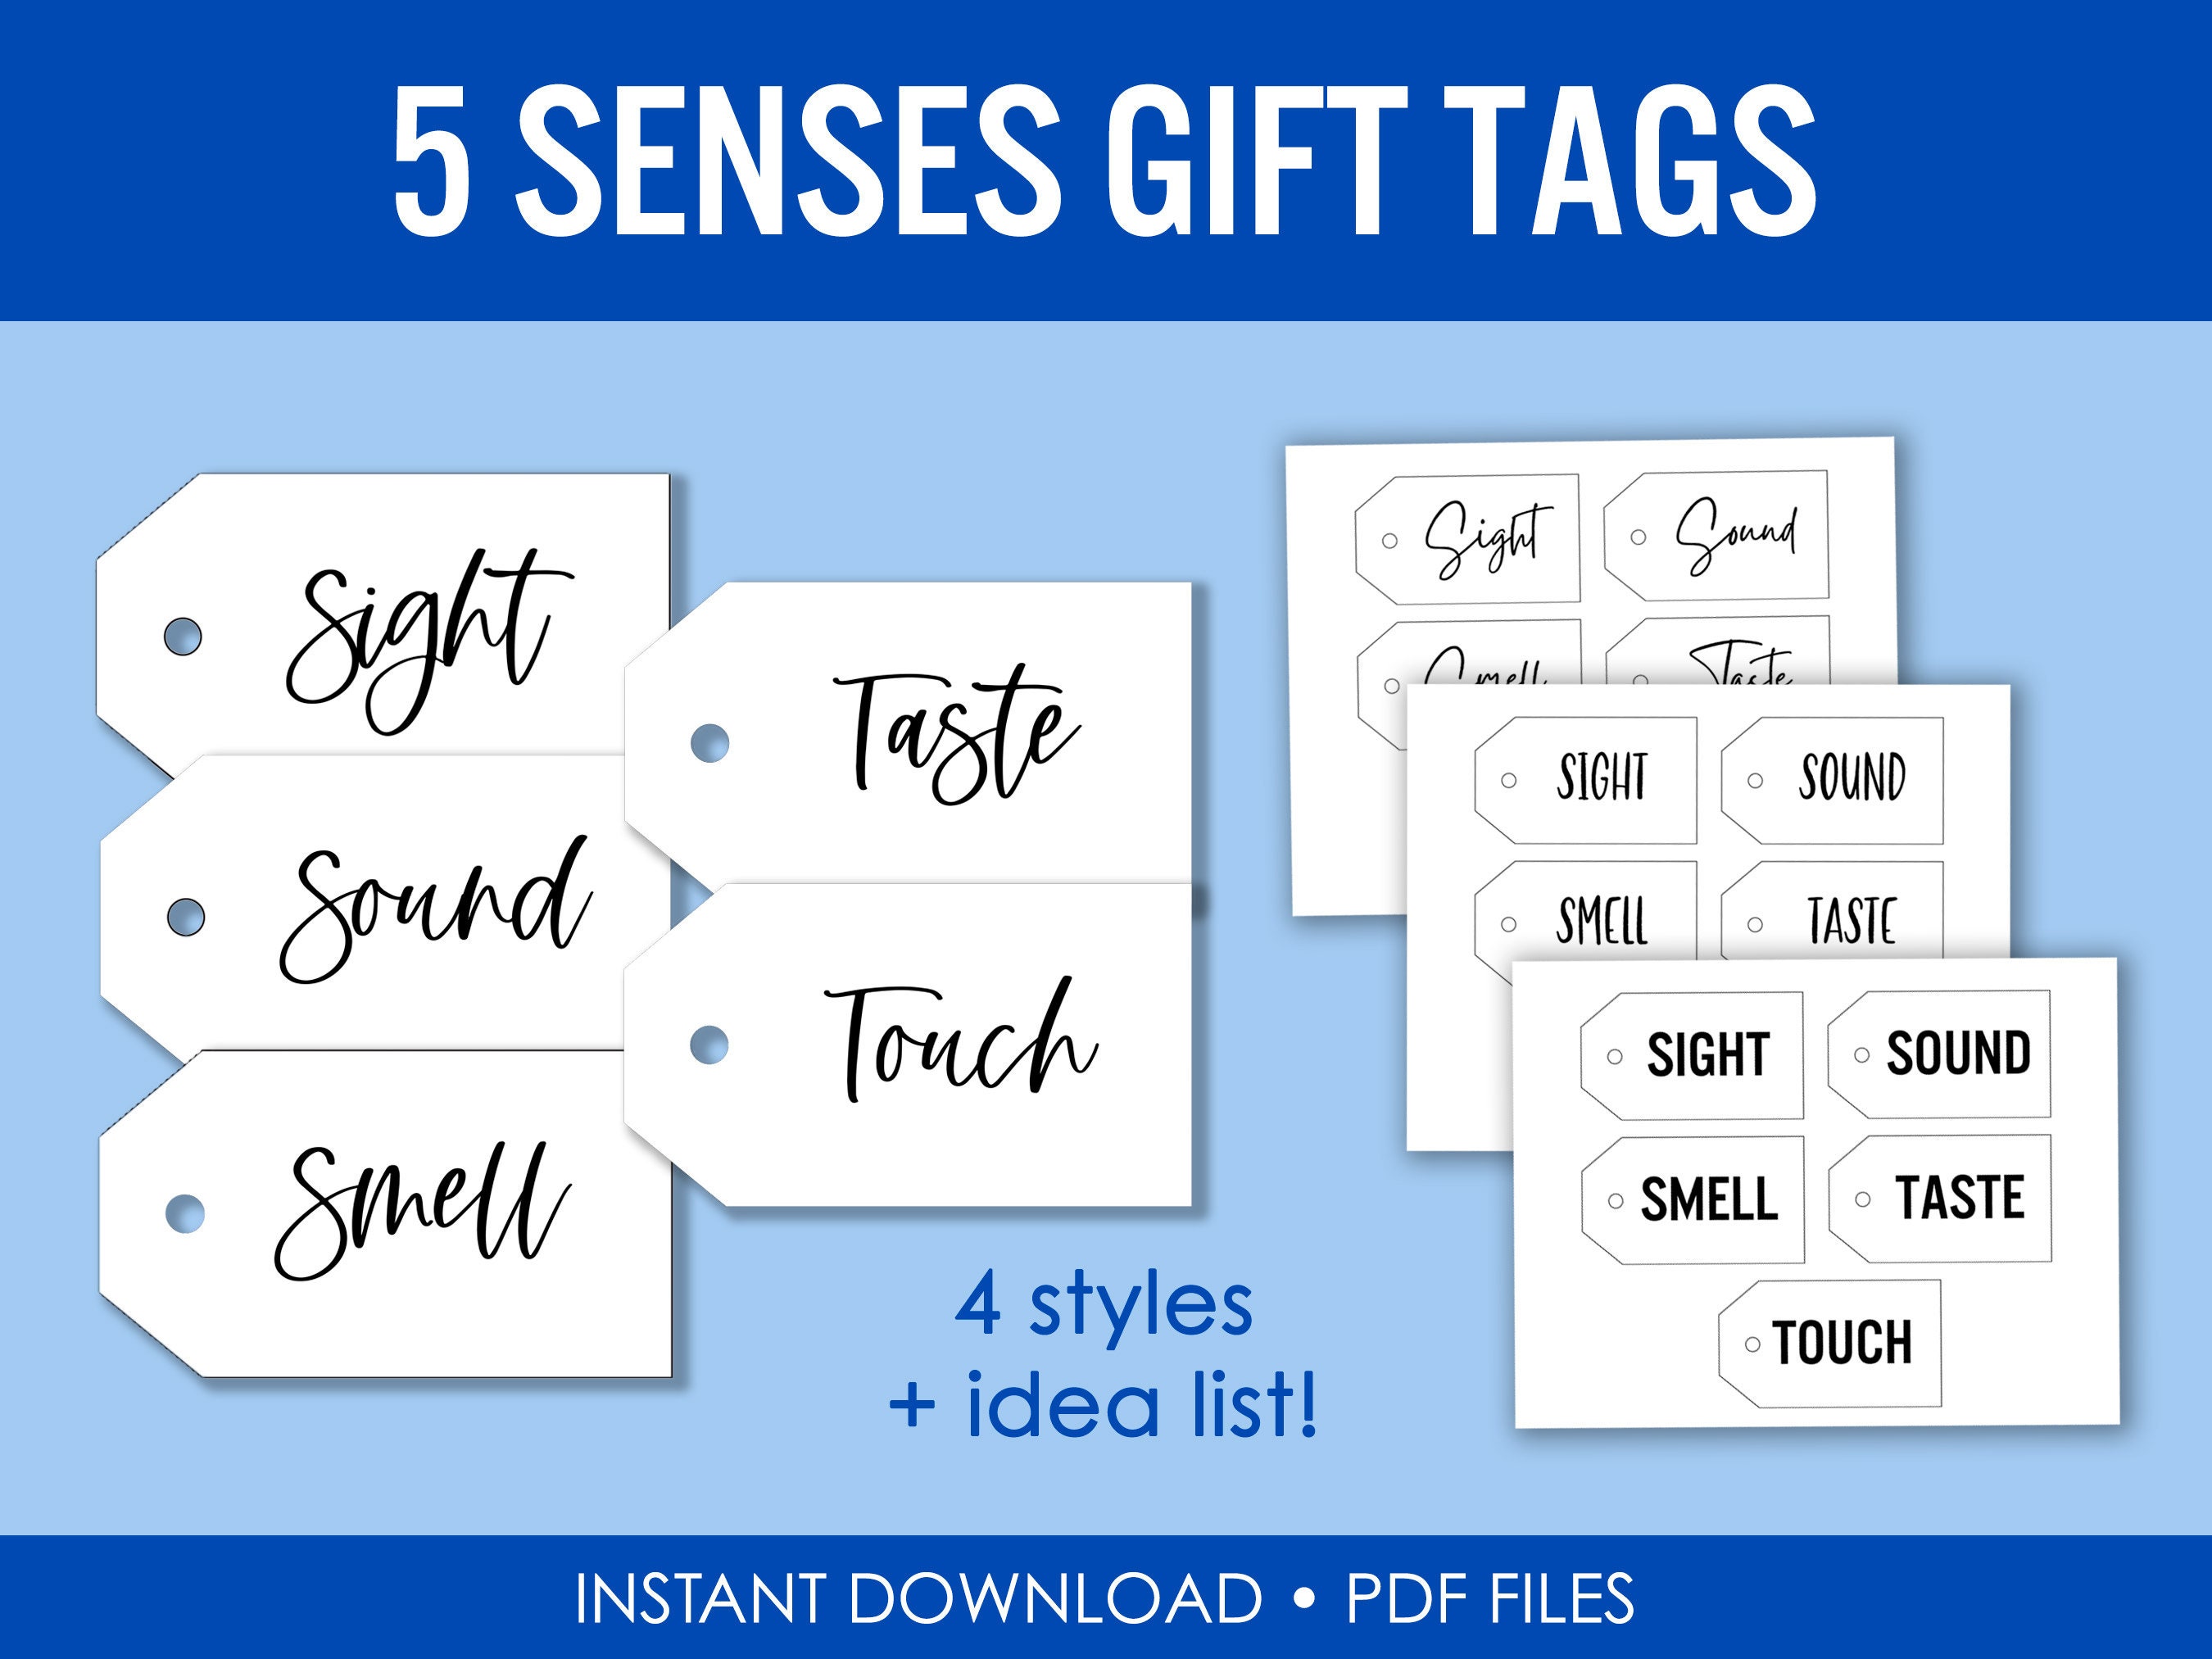 Five Senses Gift for Birthday - Gifts By Rashi